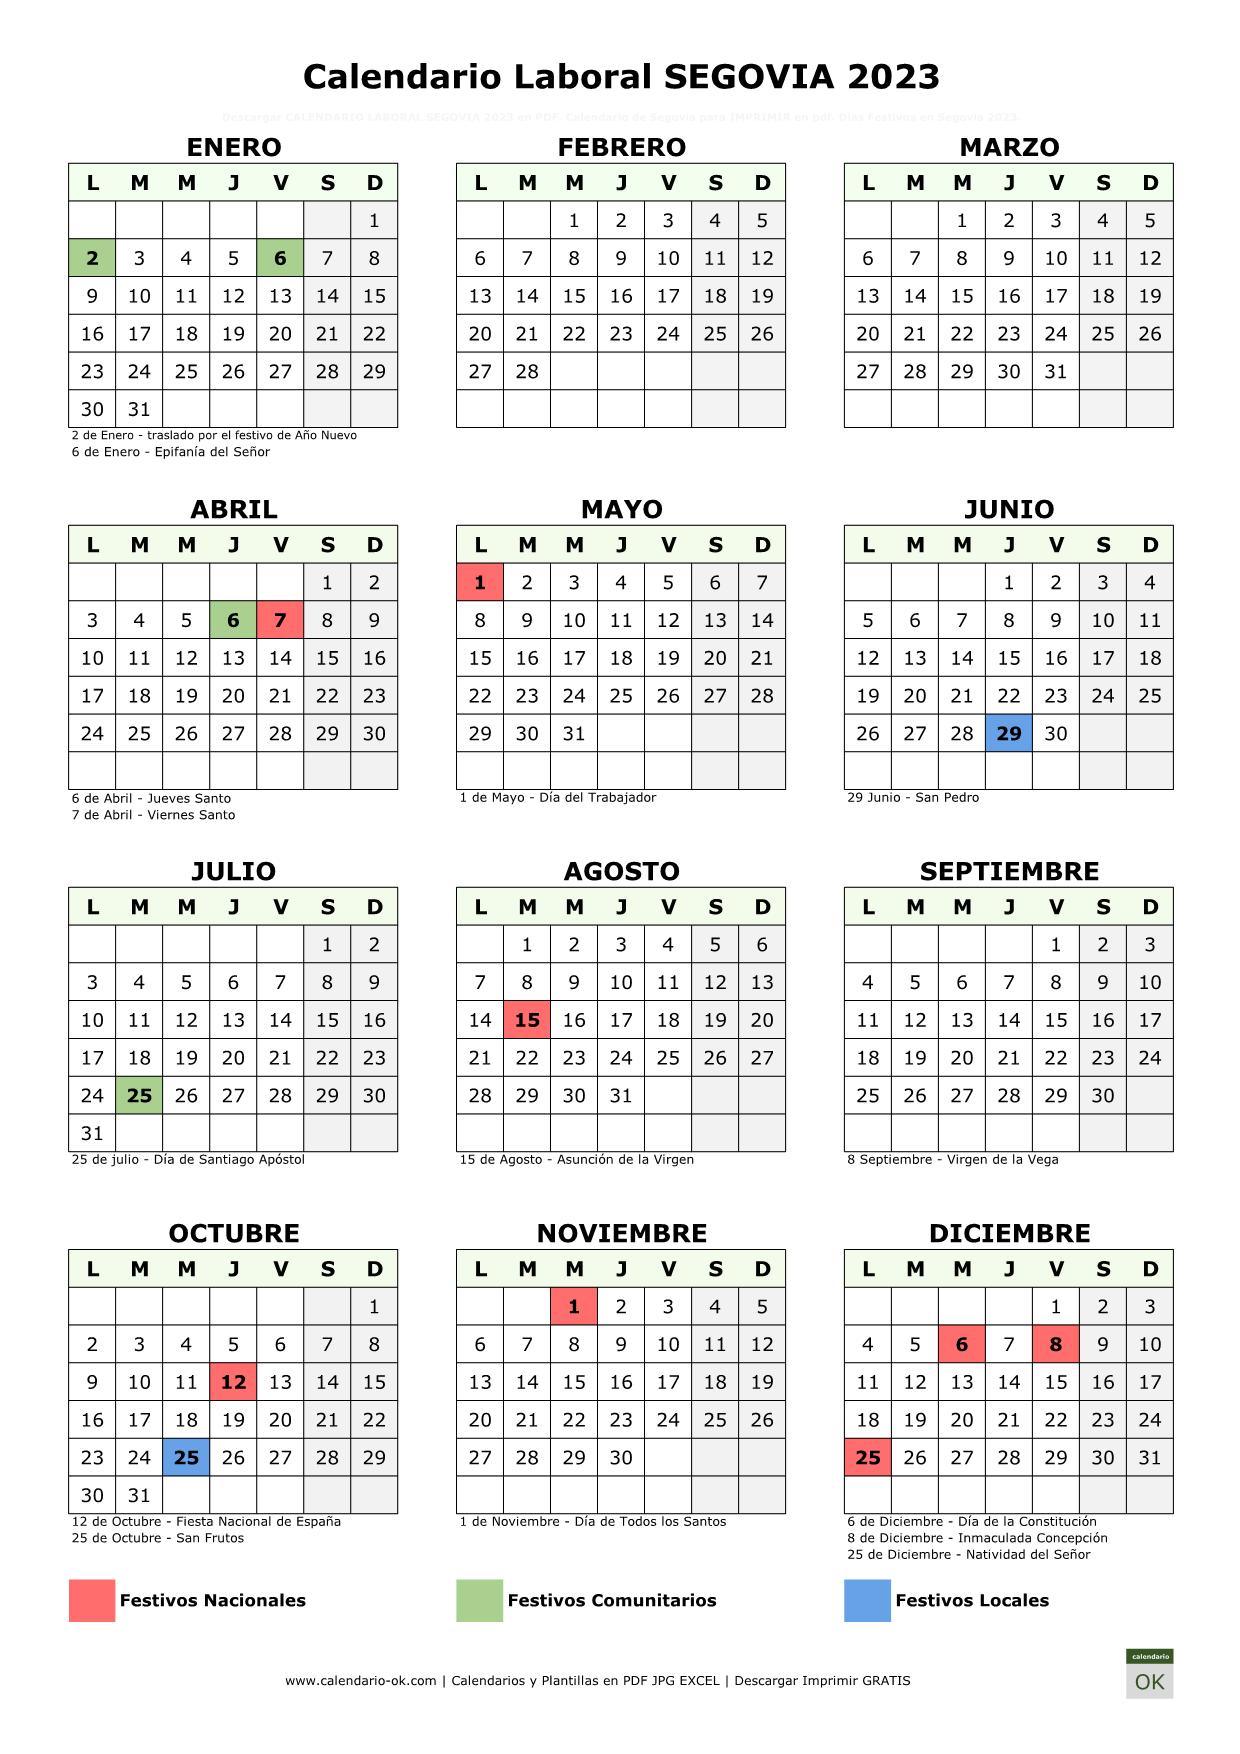 Calendario Laboral Segovia 2023 vertical